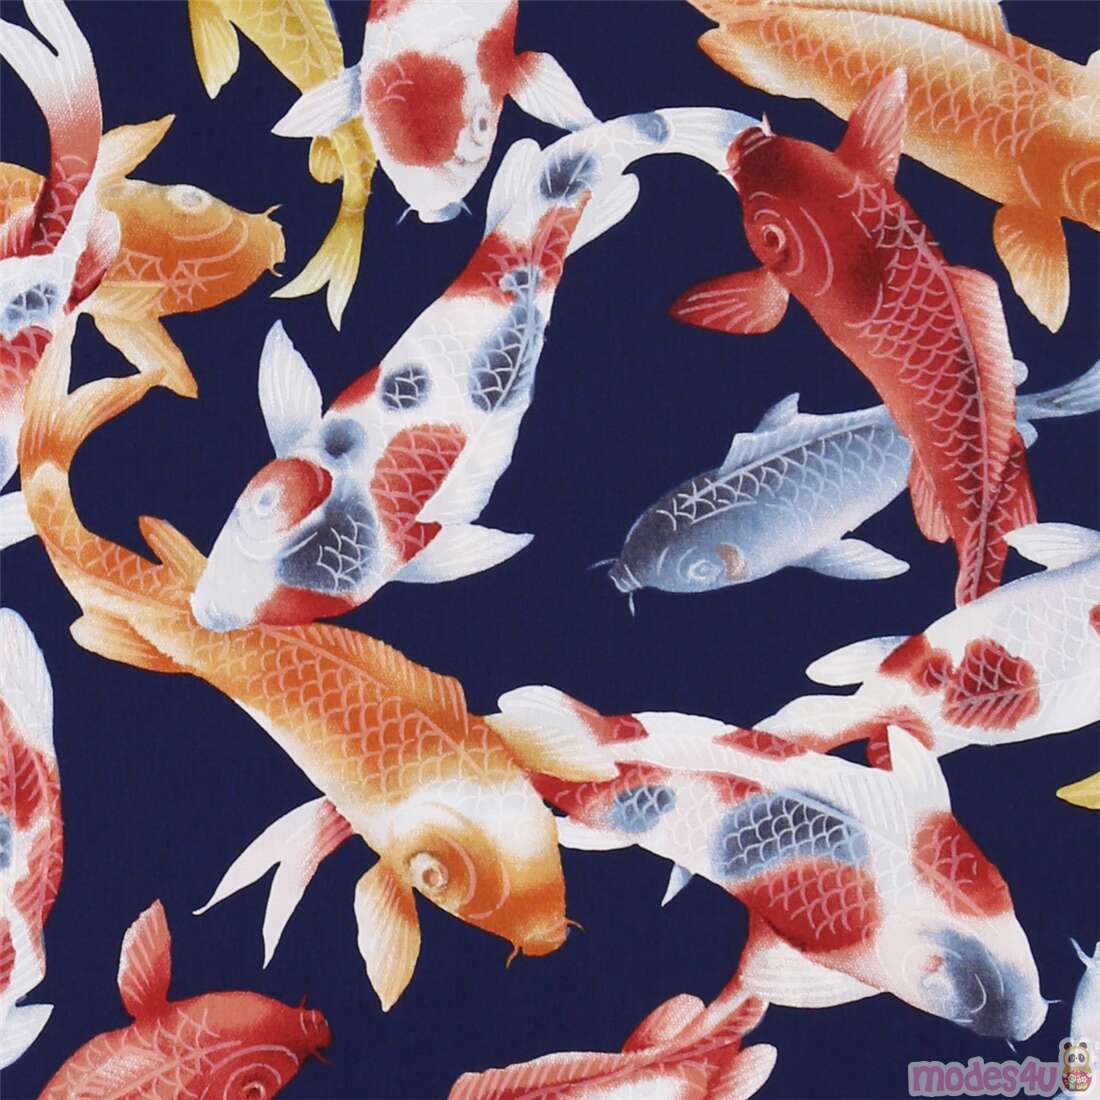 https://kawaii.kawaii.at/images/product_images/big_images/Dark-blue-cotton-fabric-big-koi-fish-Trans-Pacific-Textiles-246656-1.jpg